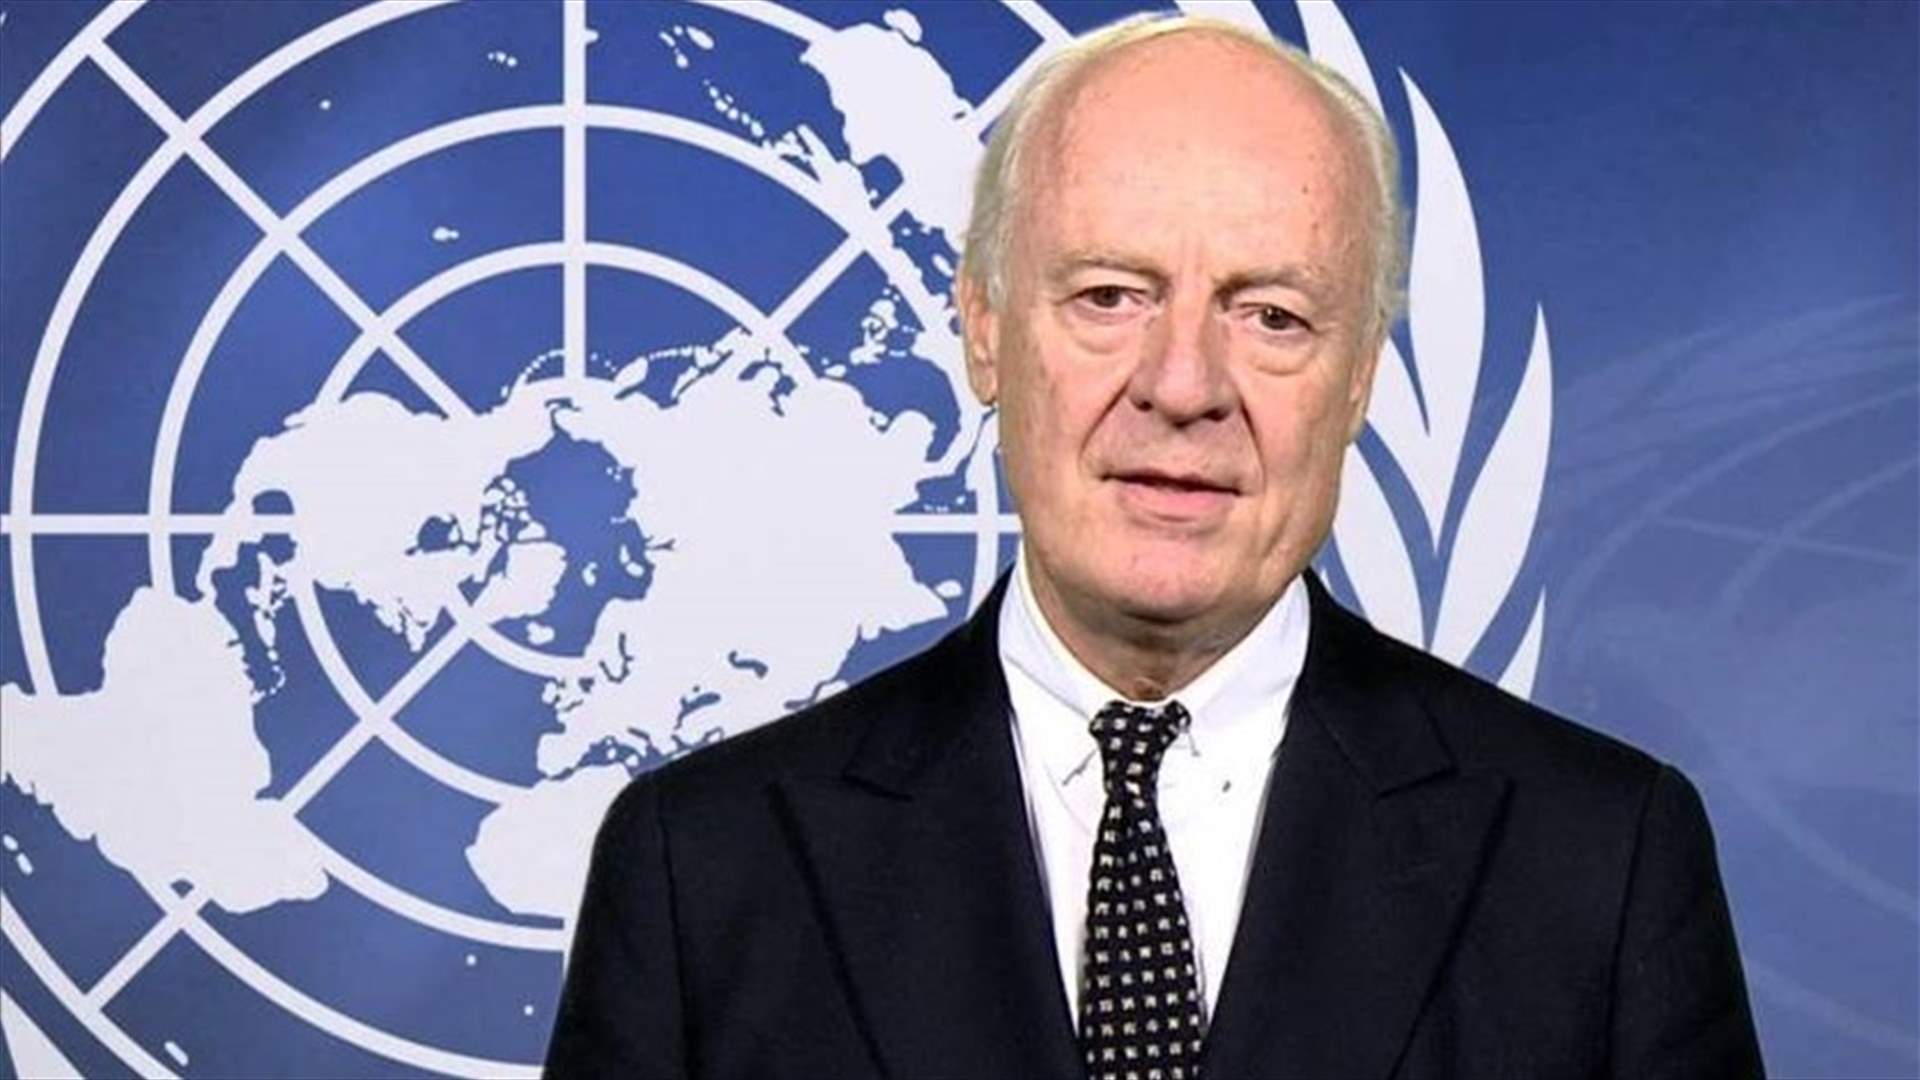 UN Syria envoy Staffan de Mistura to step down at end of November